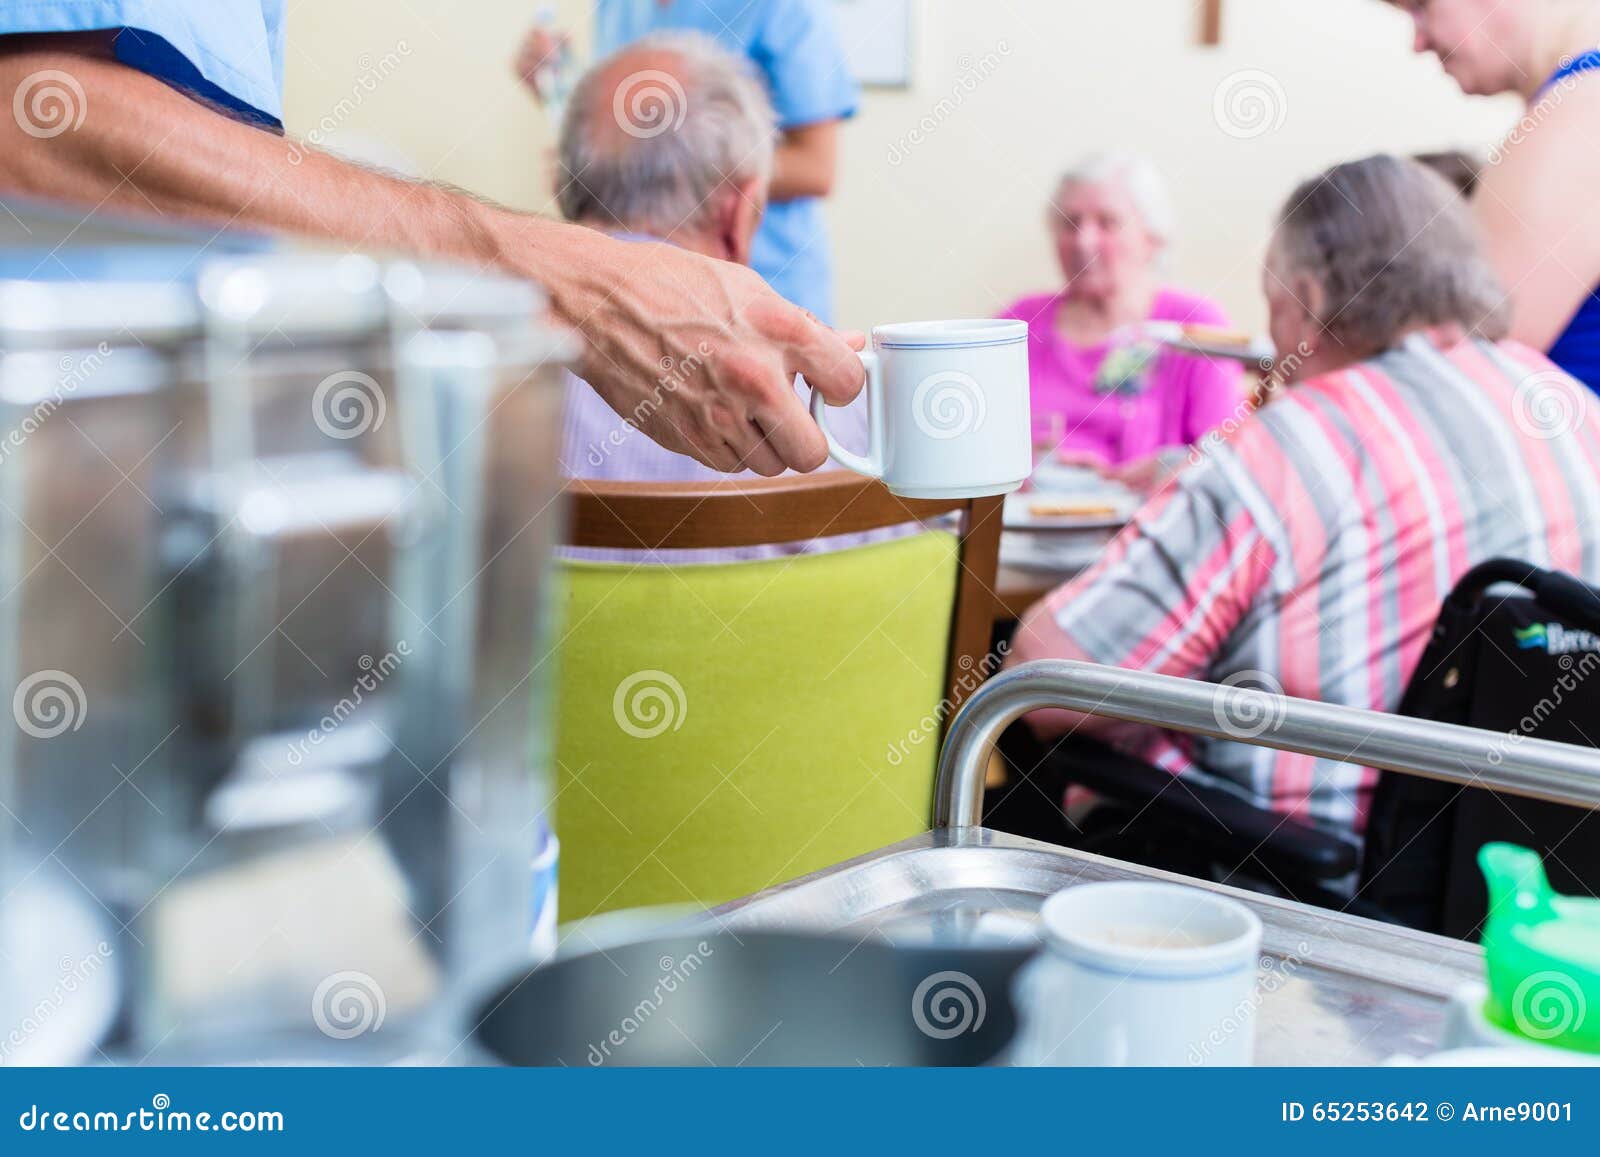 nurse serving food in nursing home